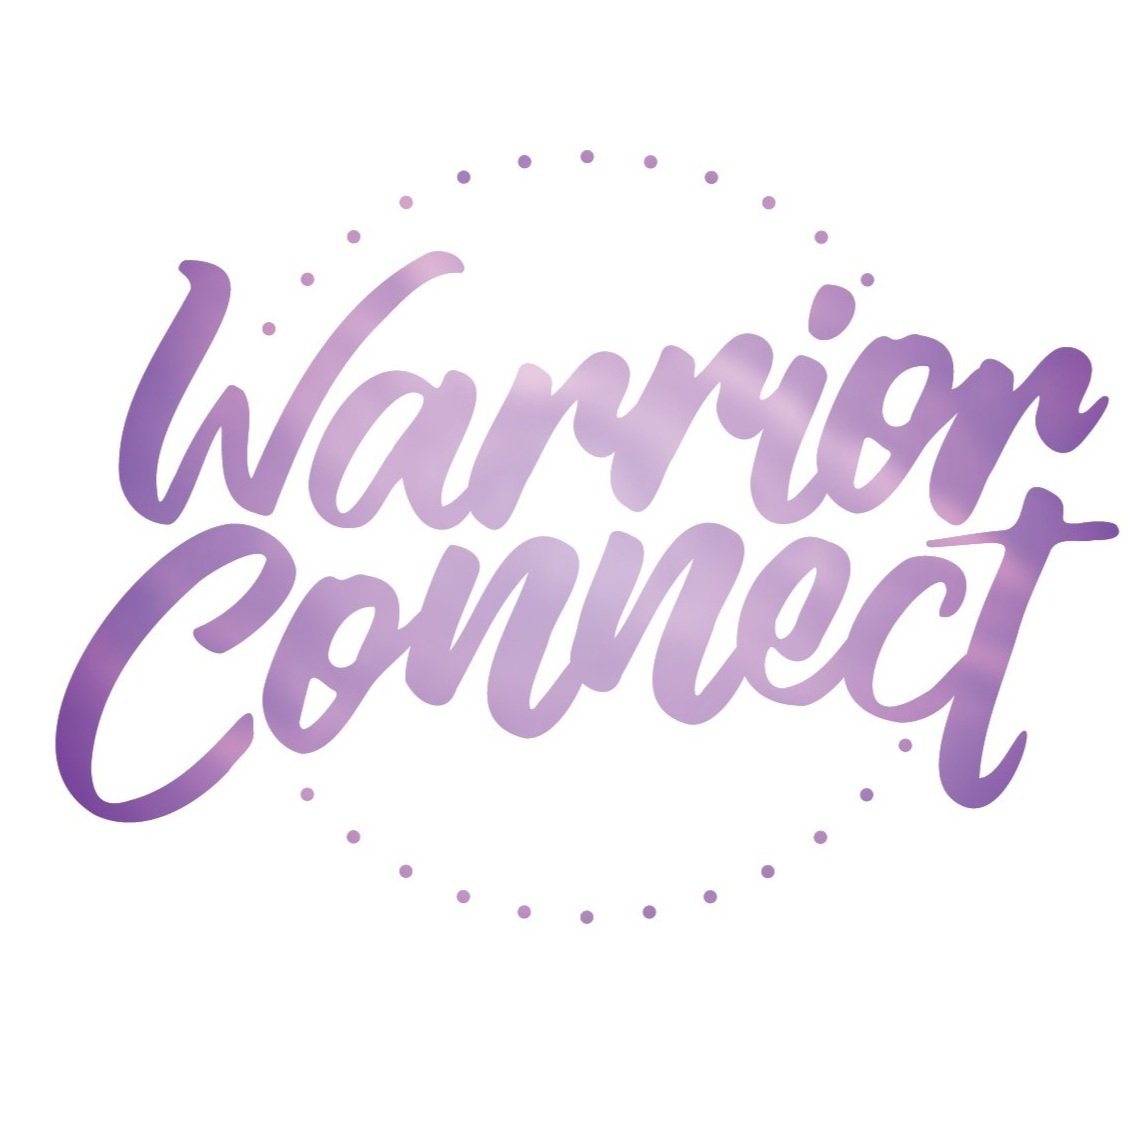 WarriorConnect